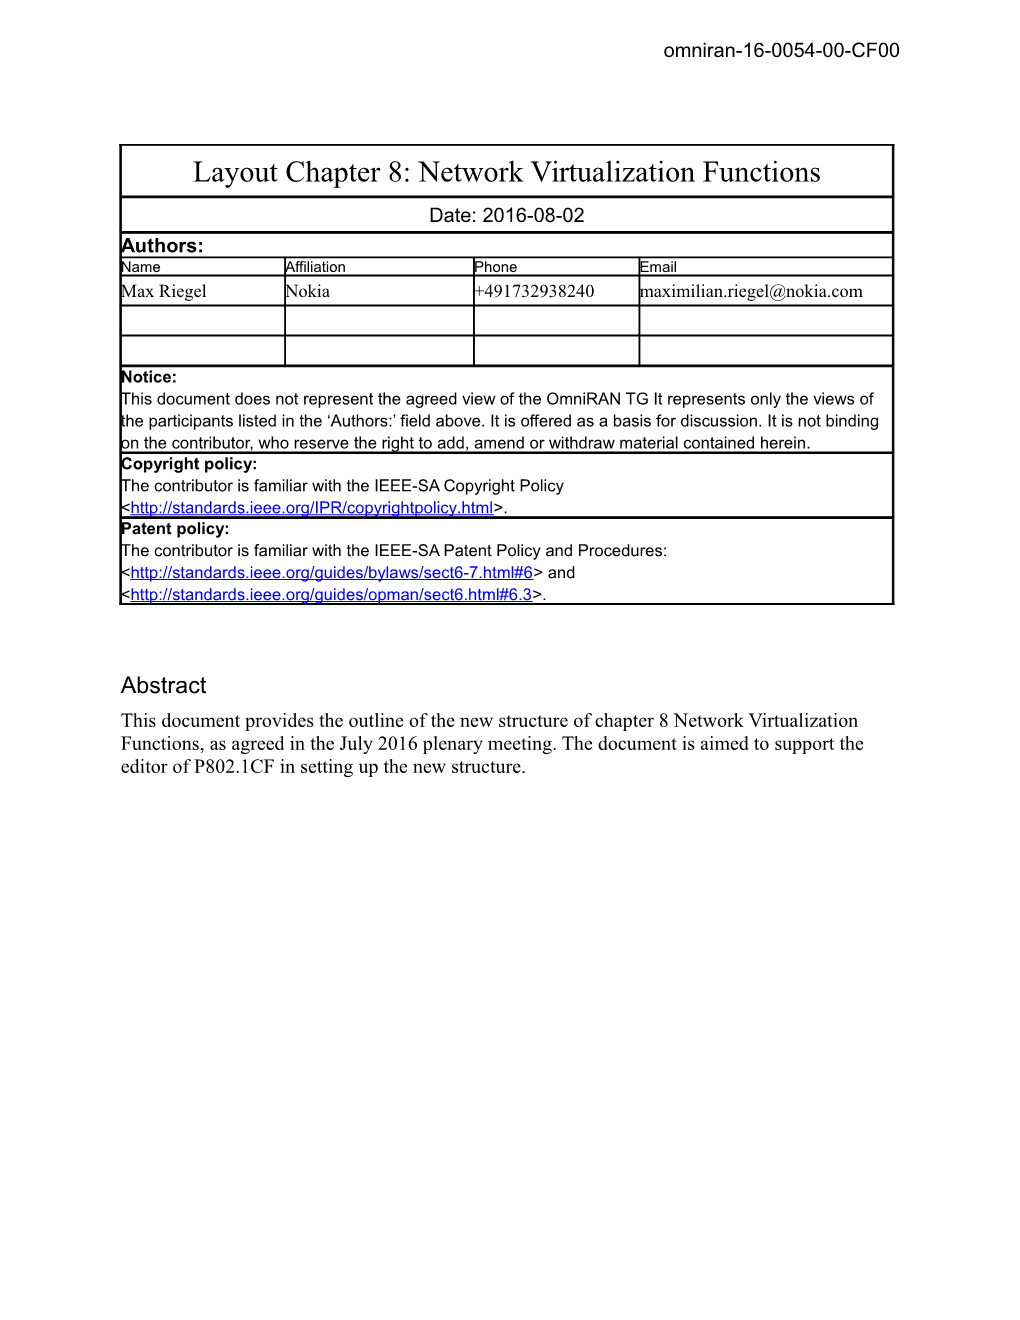 IEEE 802.16 Mentor Document Template